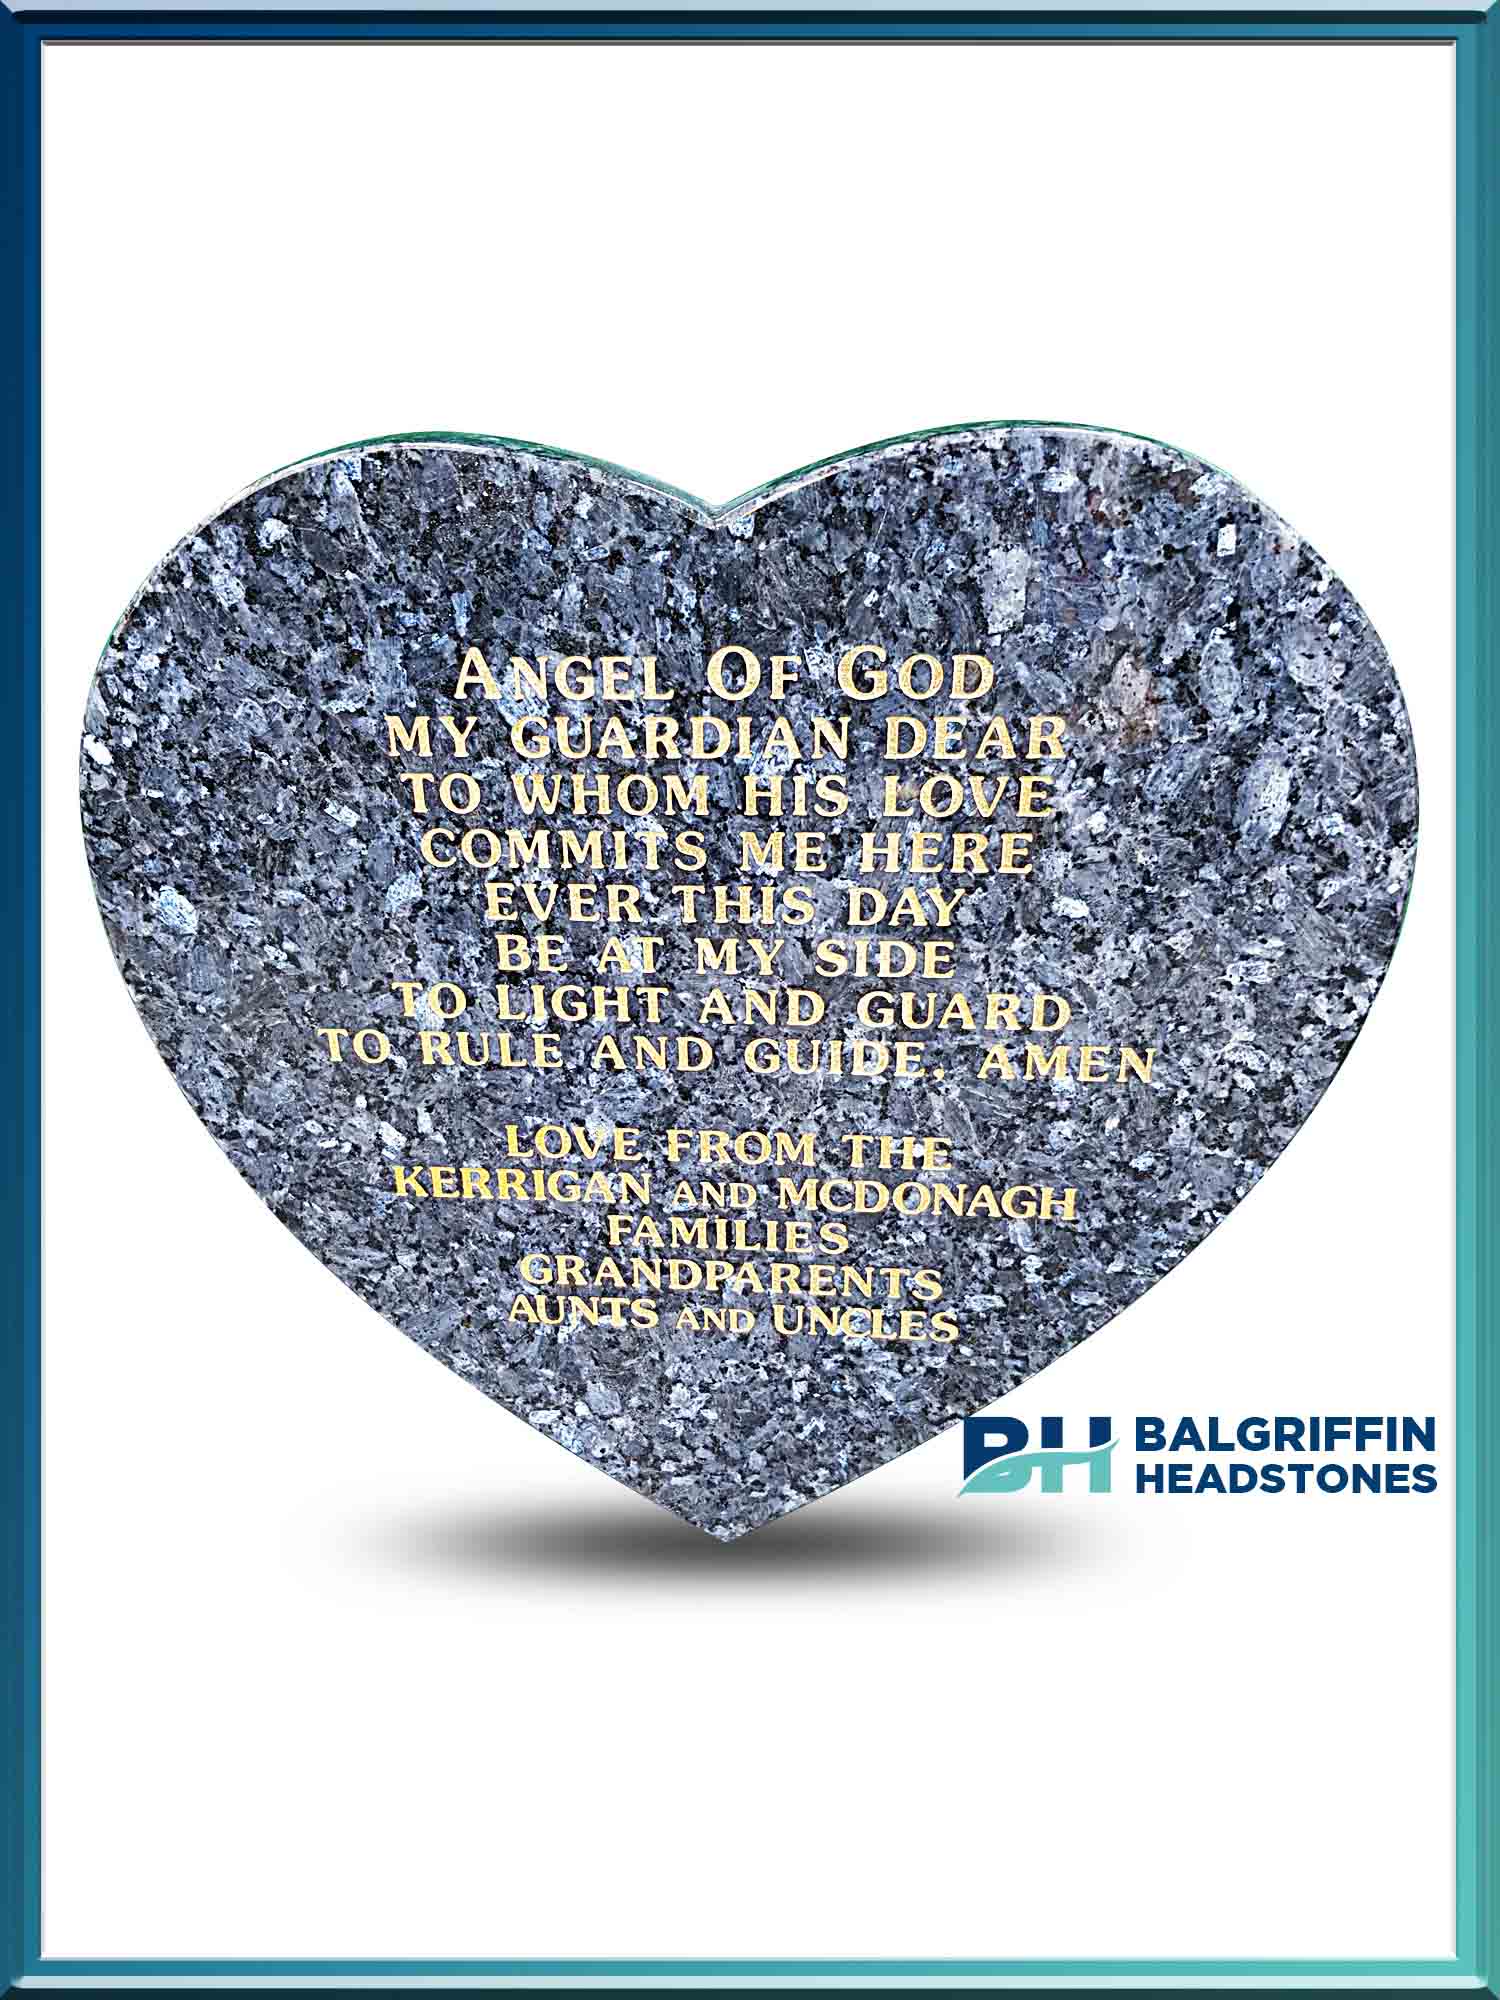 Balgriffin Headstones Hearts